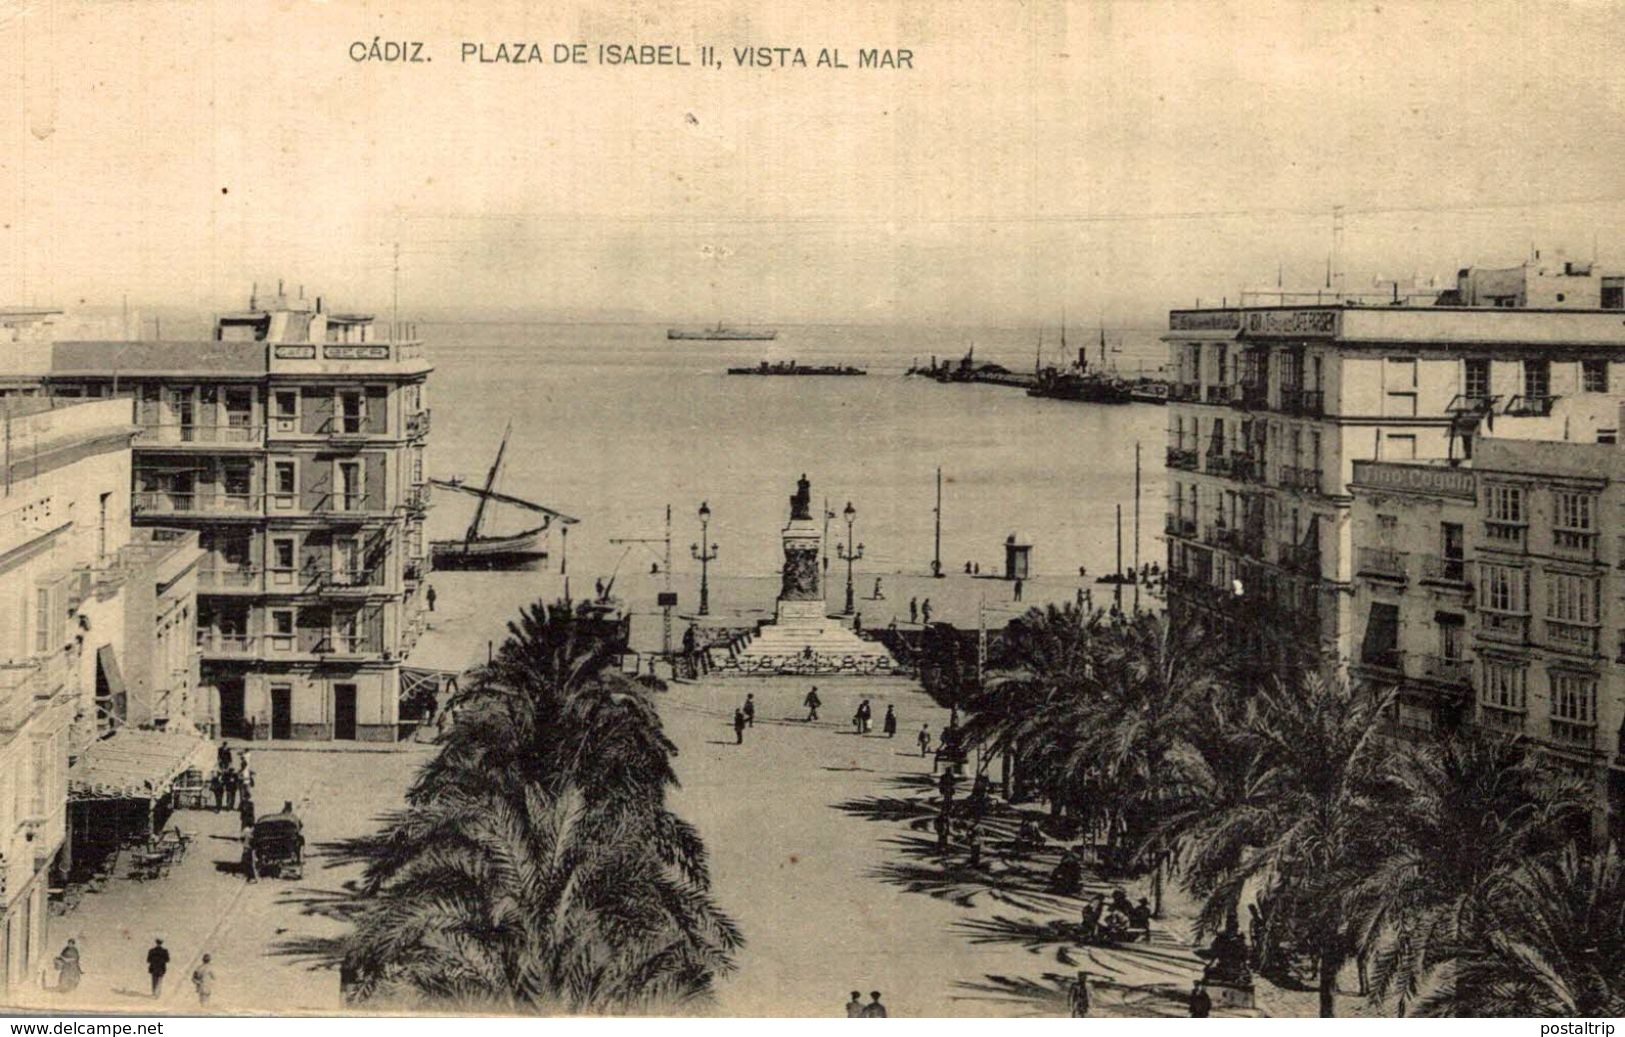 CADIZ. PLAZA DE ISABEL II. VISTA AL MAR. - HAUSER Y MENER - Cádiz